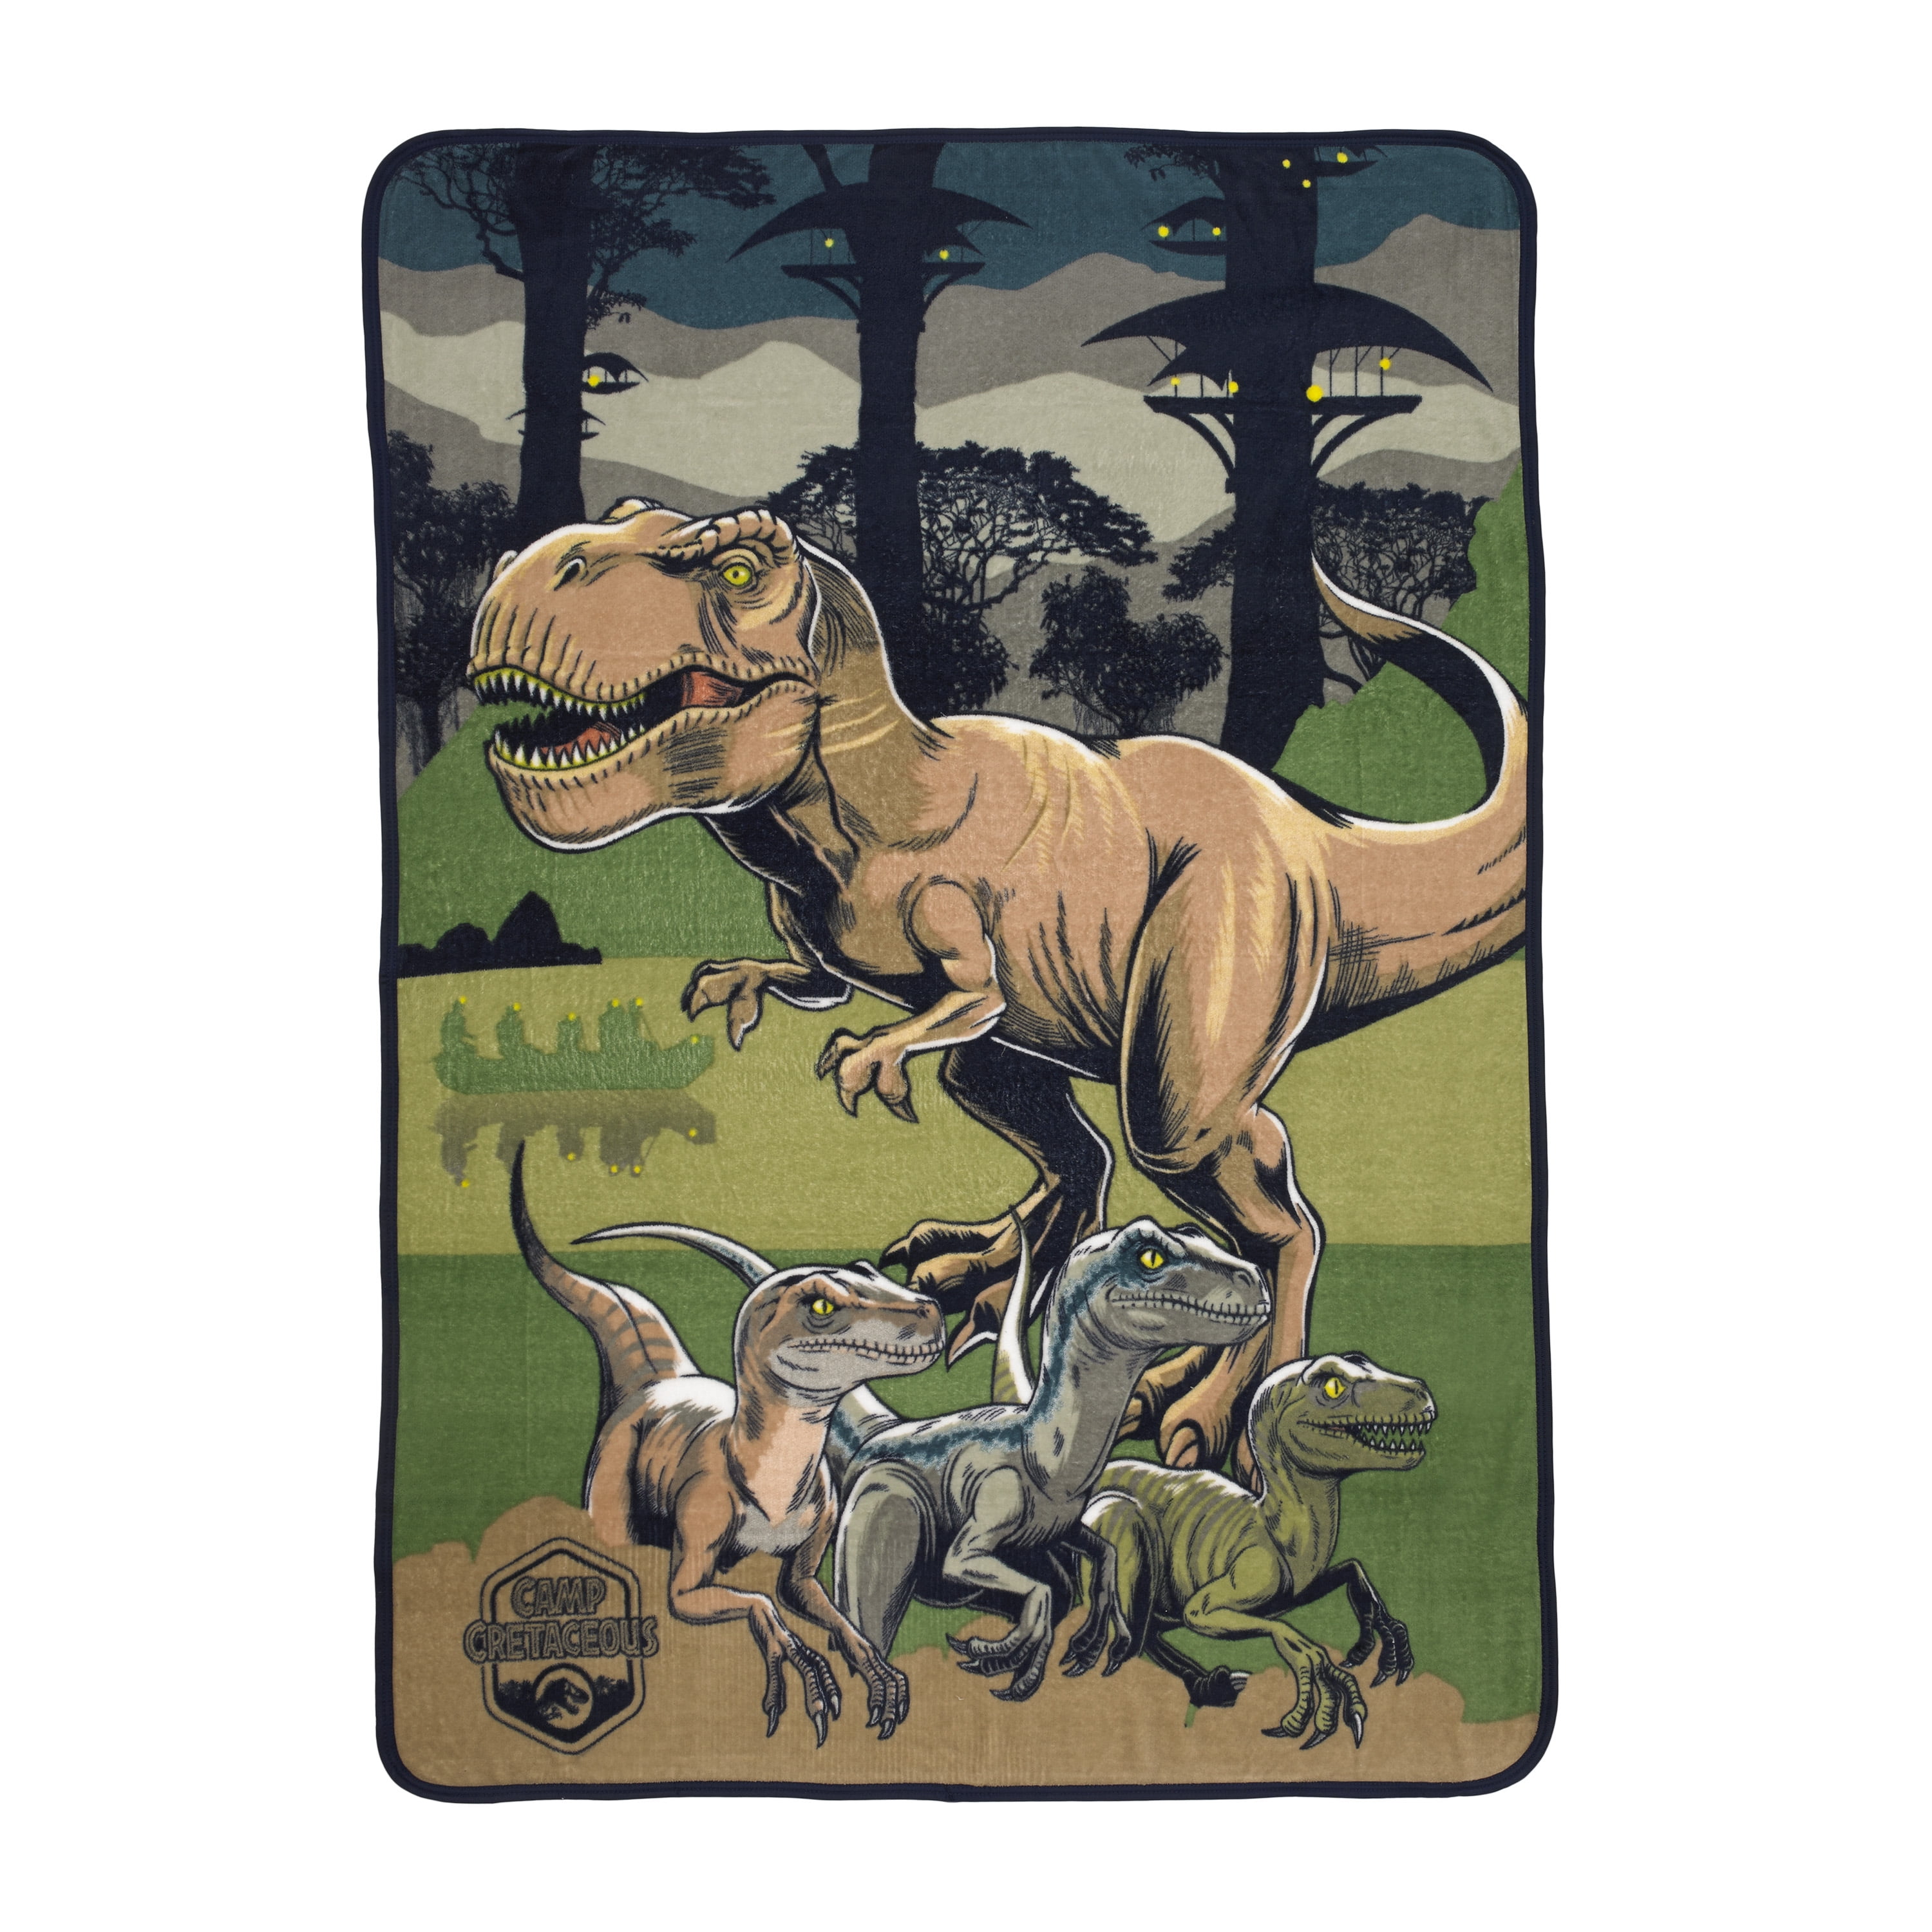 Dinosaur Land 🦕: Jurassic Dino Games For Kids Free